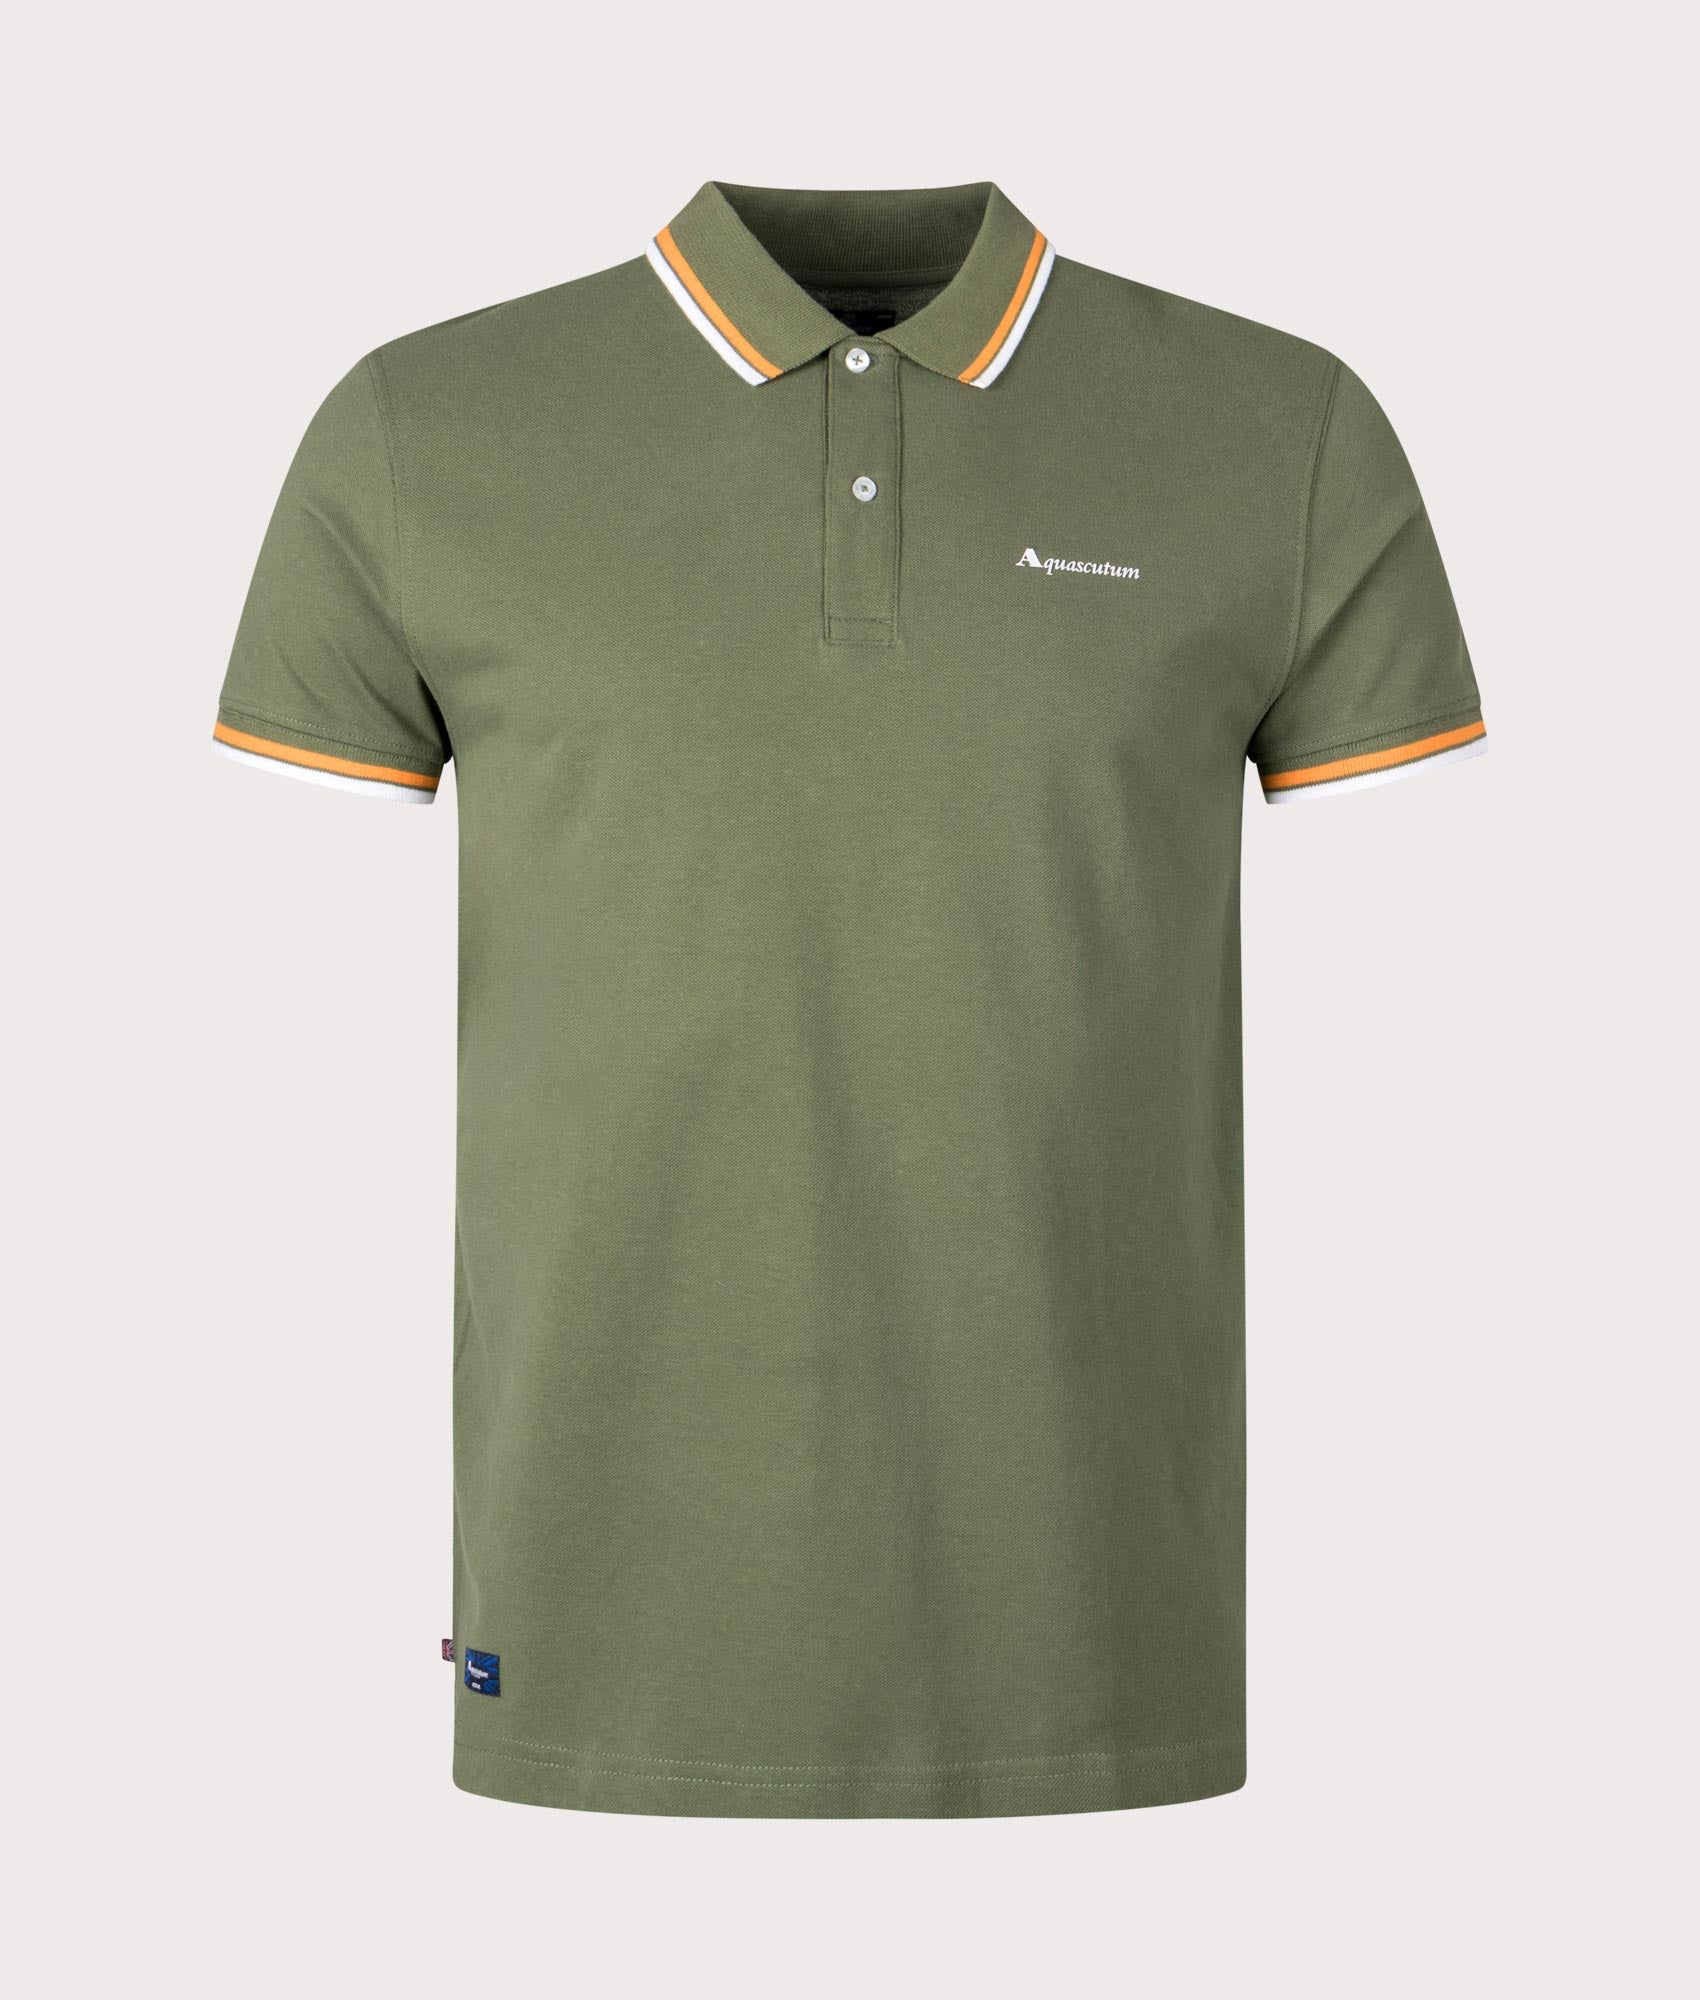 Aquascutum Mens Active Cotton Stripes Dry-Fit Polo Shirt - Colour: 06 Army Green - Size: XL